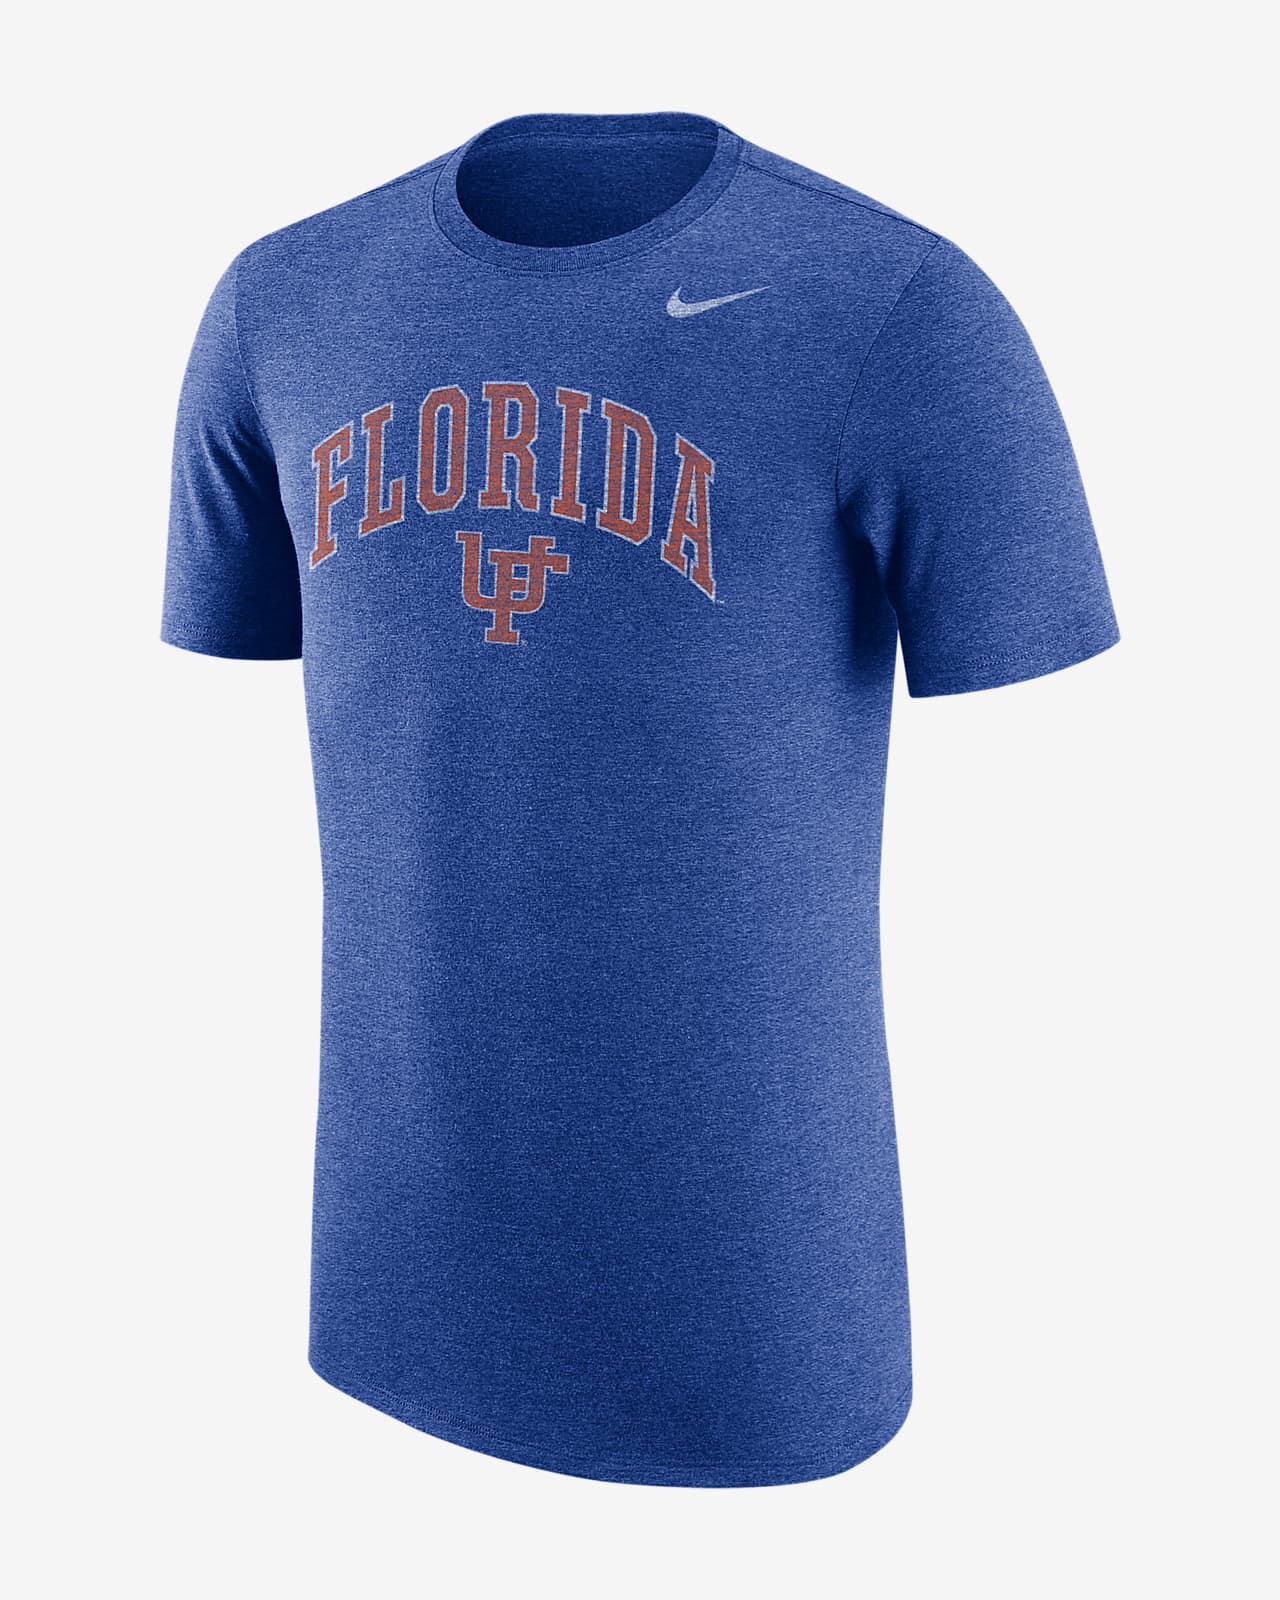 Nike College (Florida) Men's T-Shirt. Nike.com